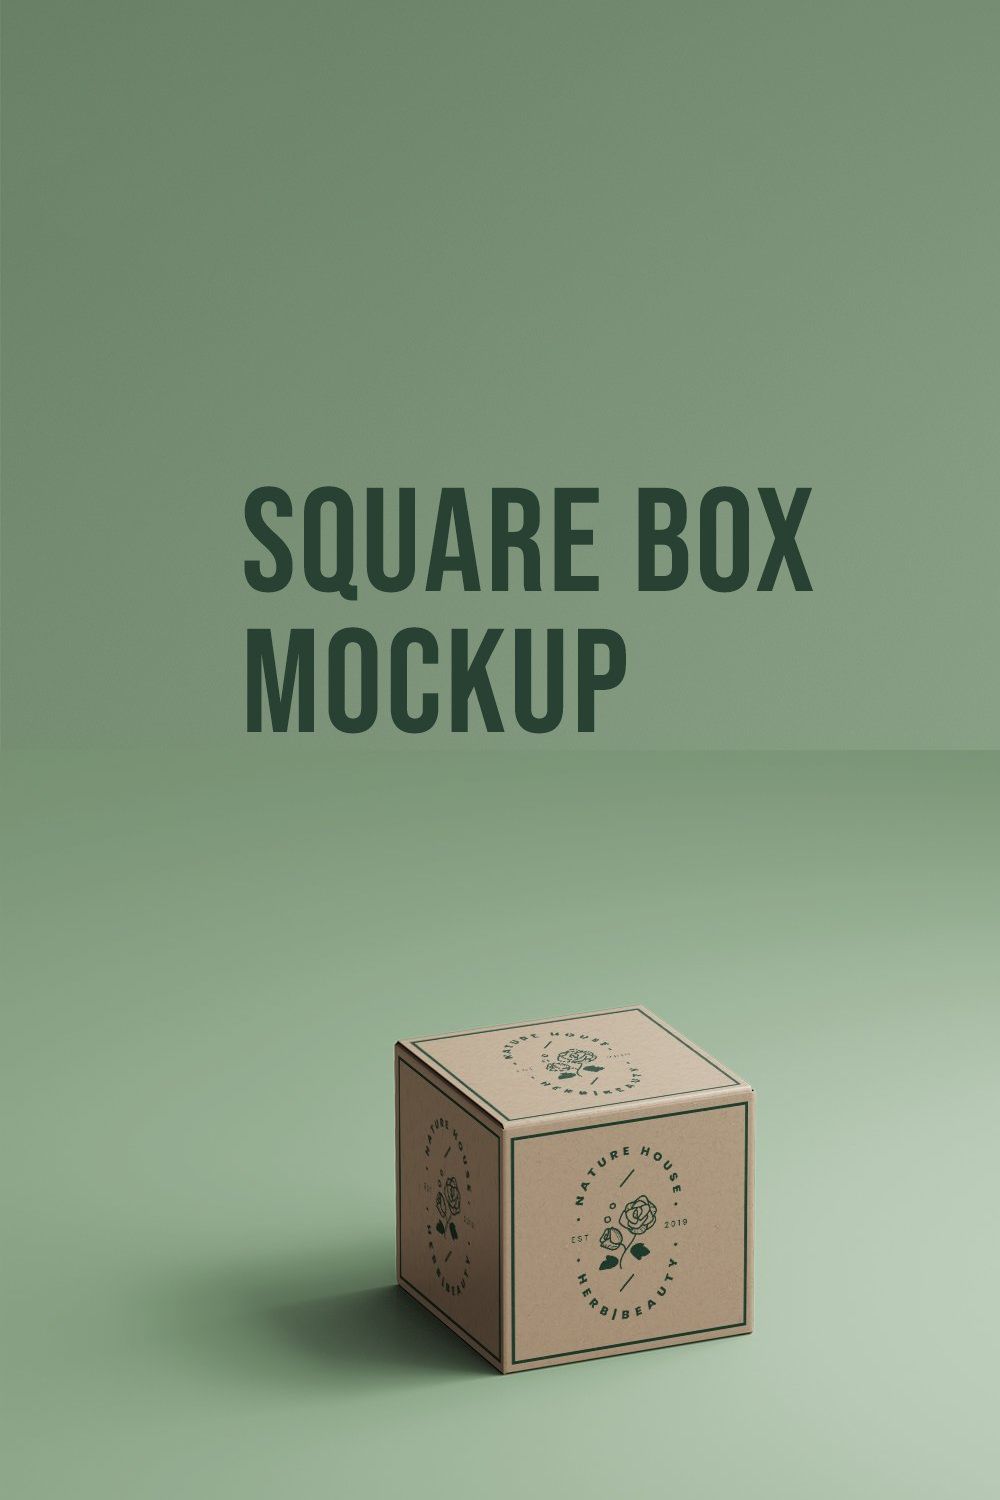 Square Box Mockup pinterest preview image.